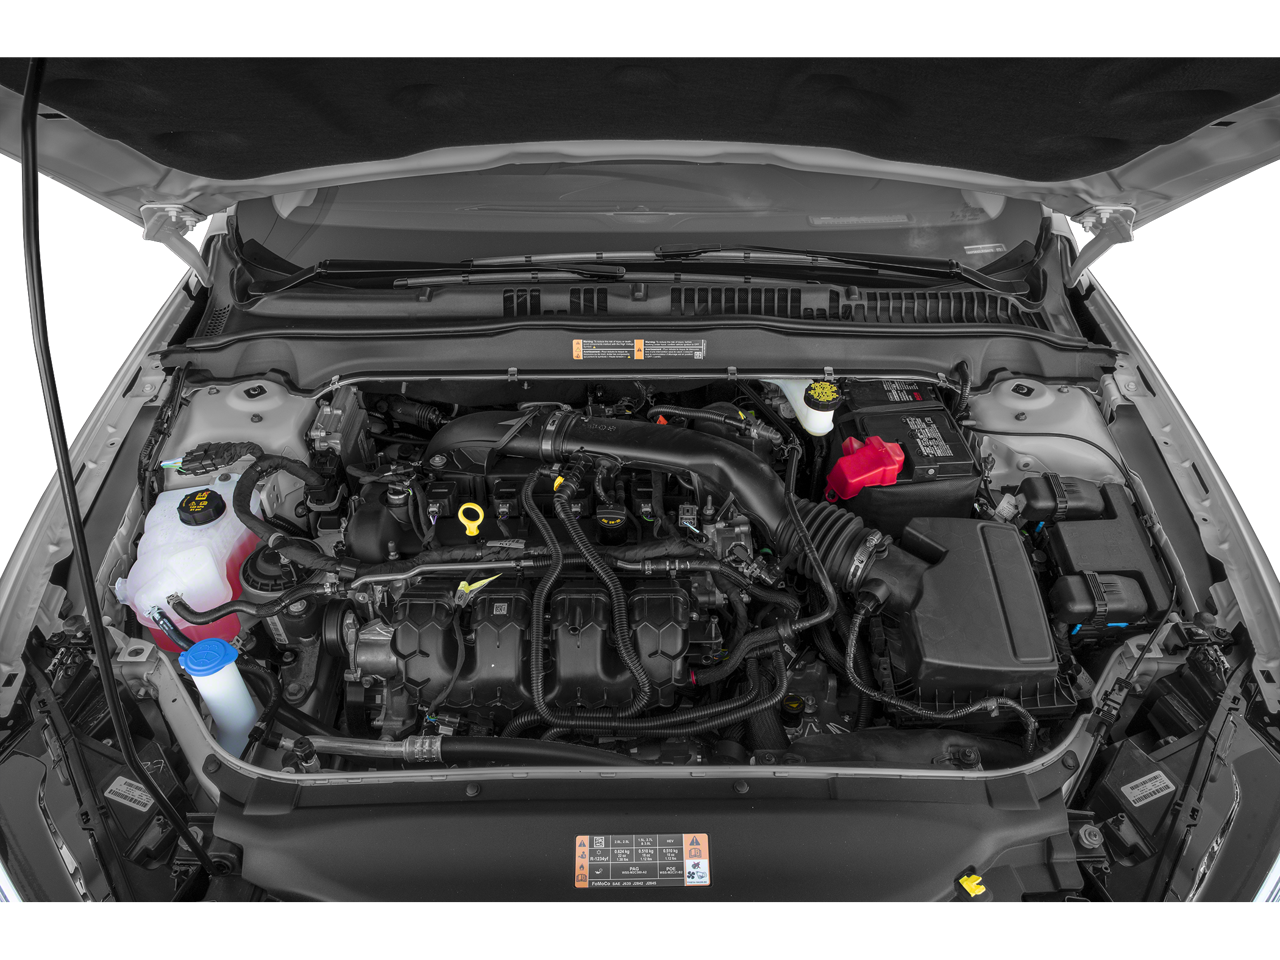 2020 Ford Fusion Titanium AWD 4dr Sedan